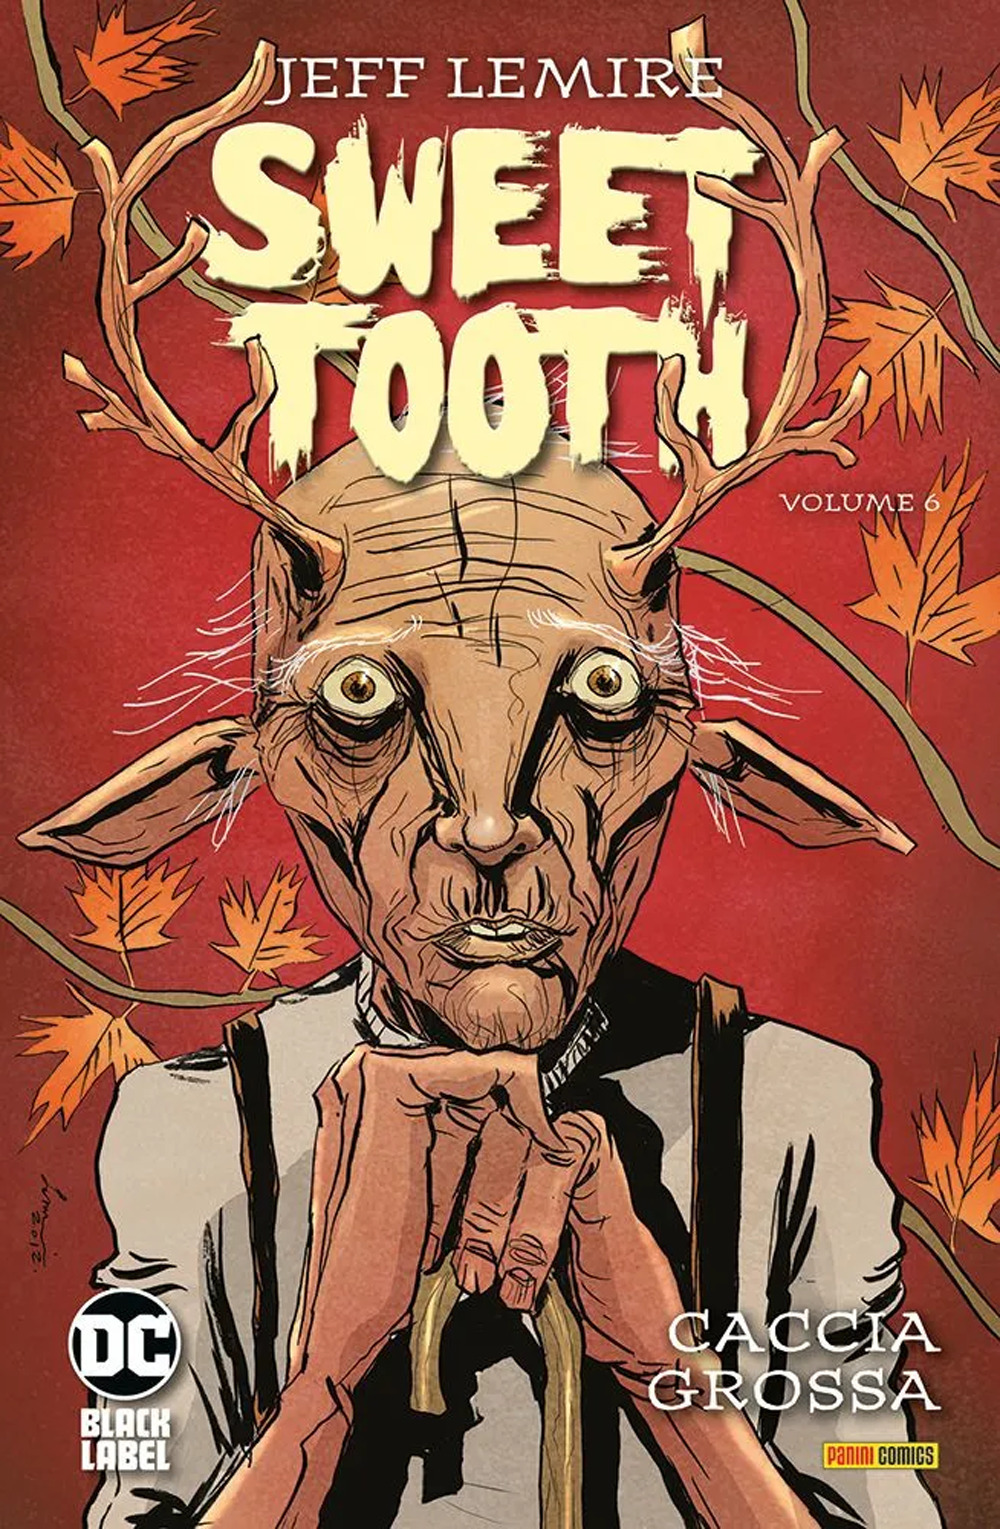 Sweet tooth. Vol. 6: Caccia Grossa